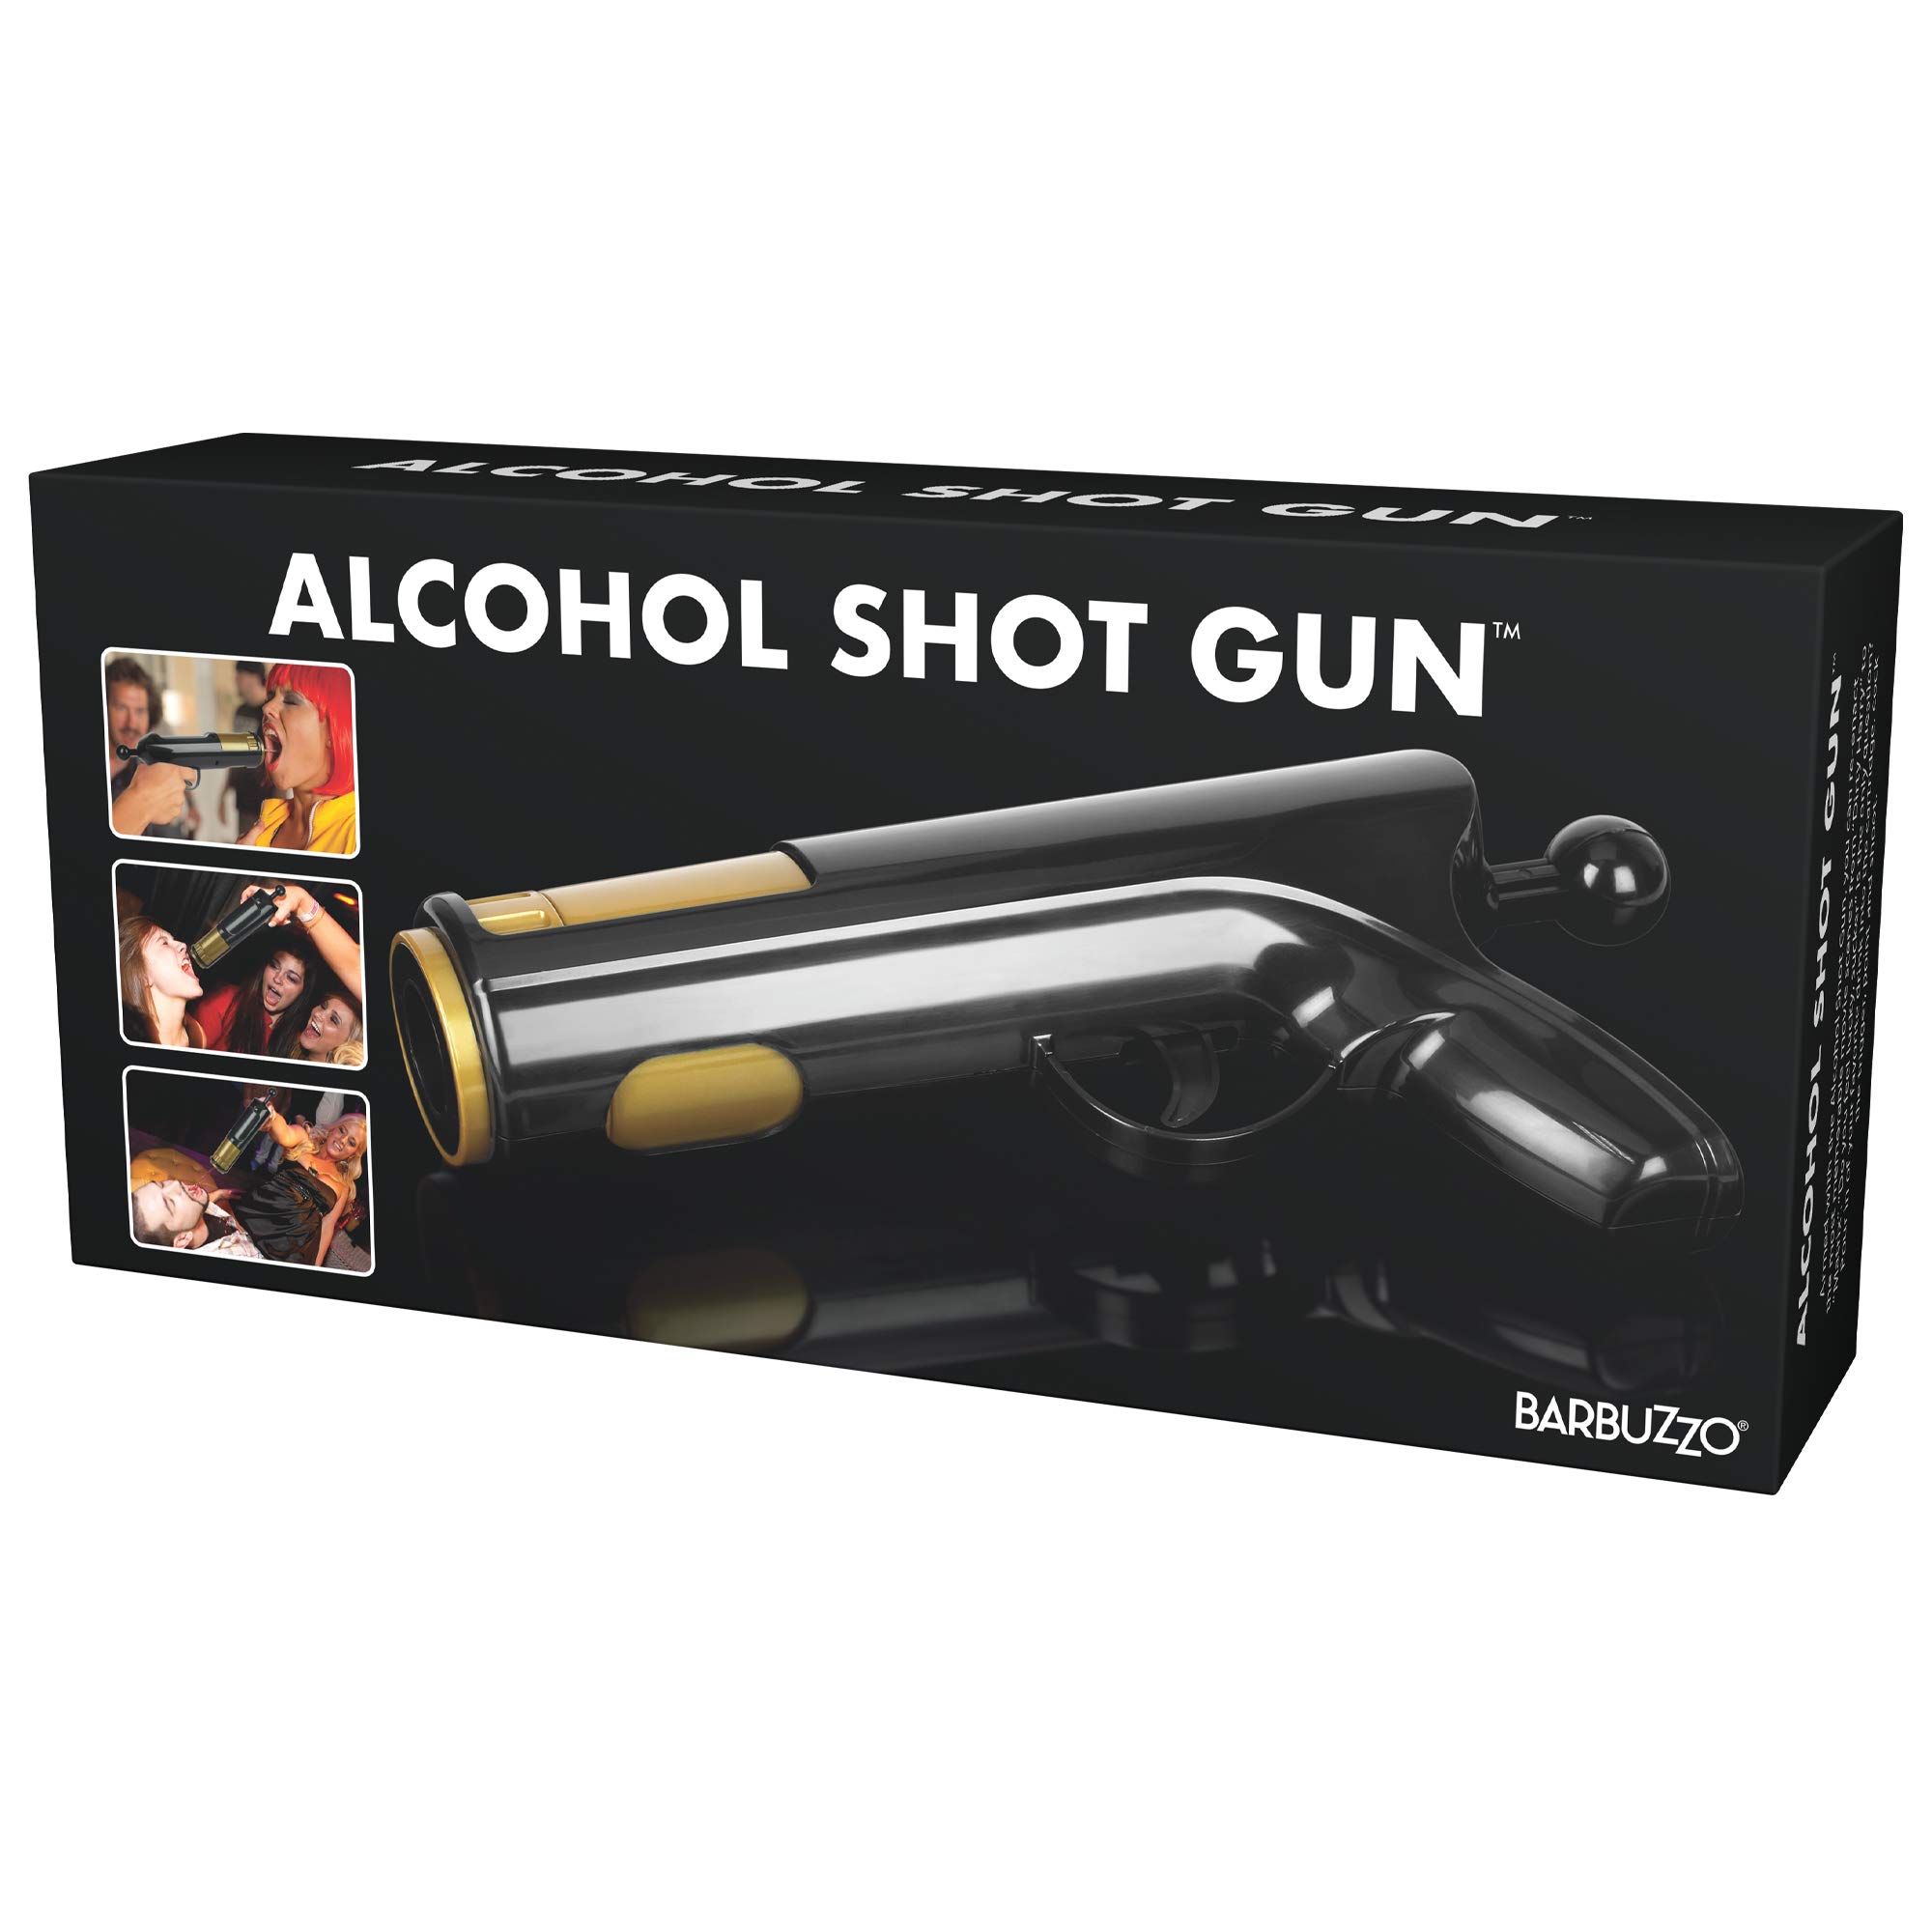 The Original Alcohol Shot Gun - Load Your Favorite Alcohol, Shoot